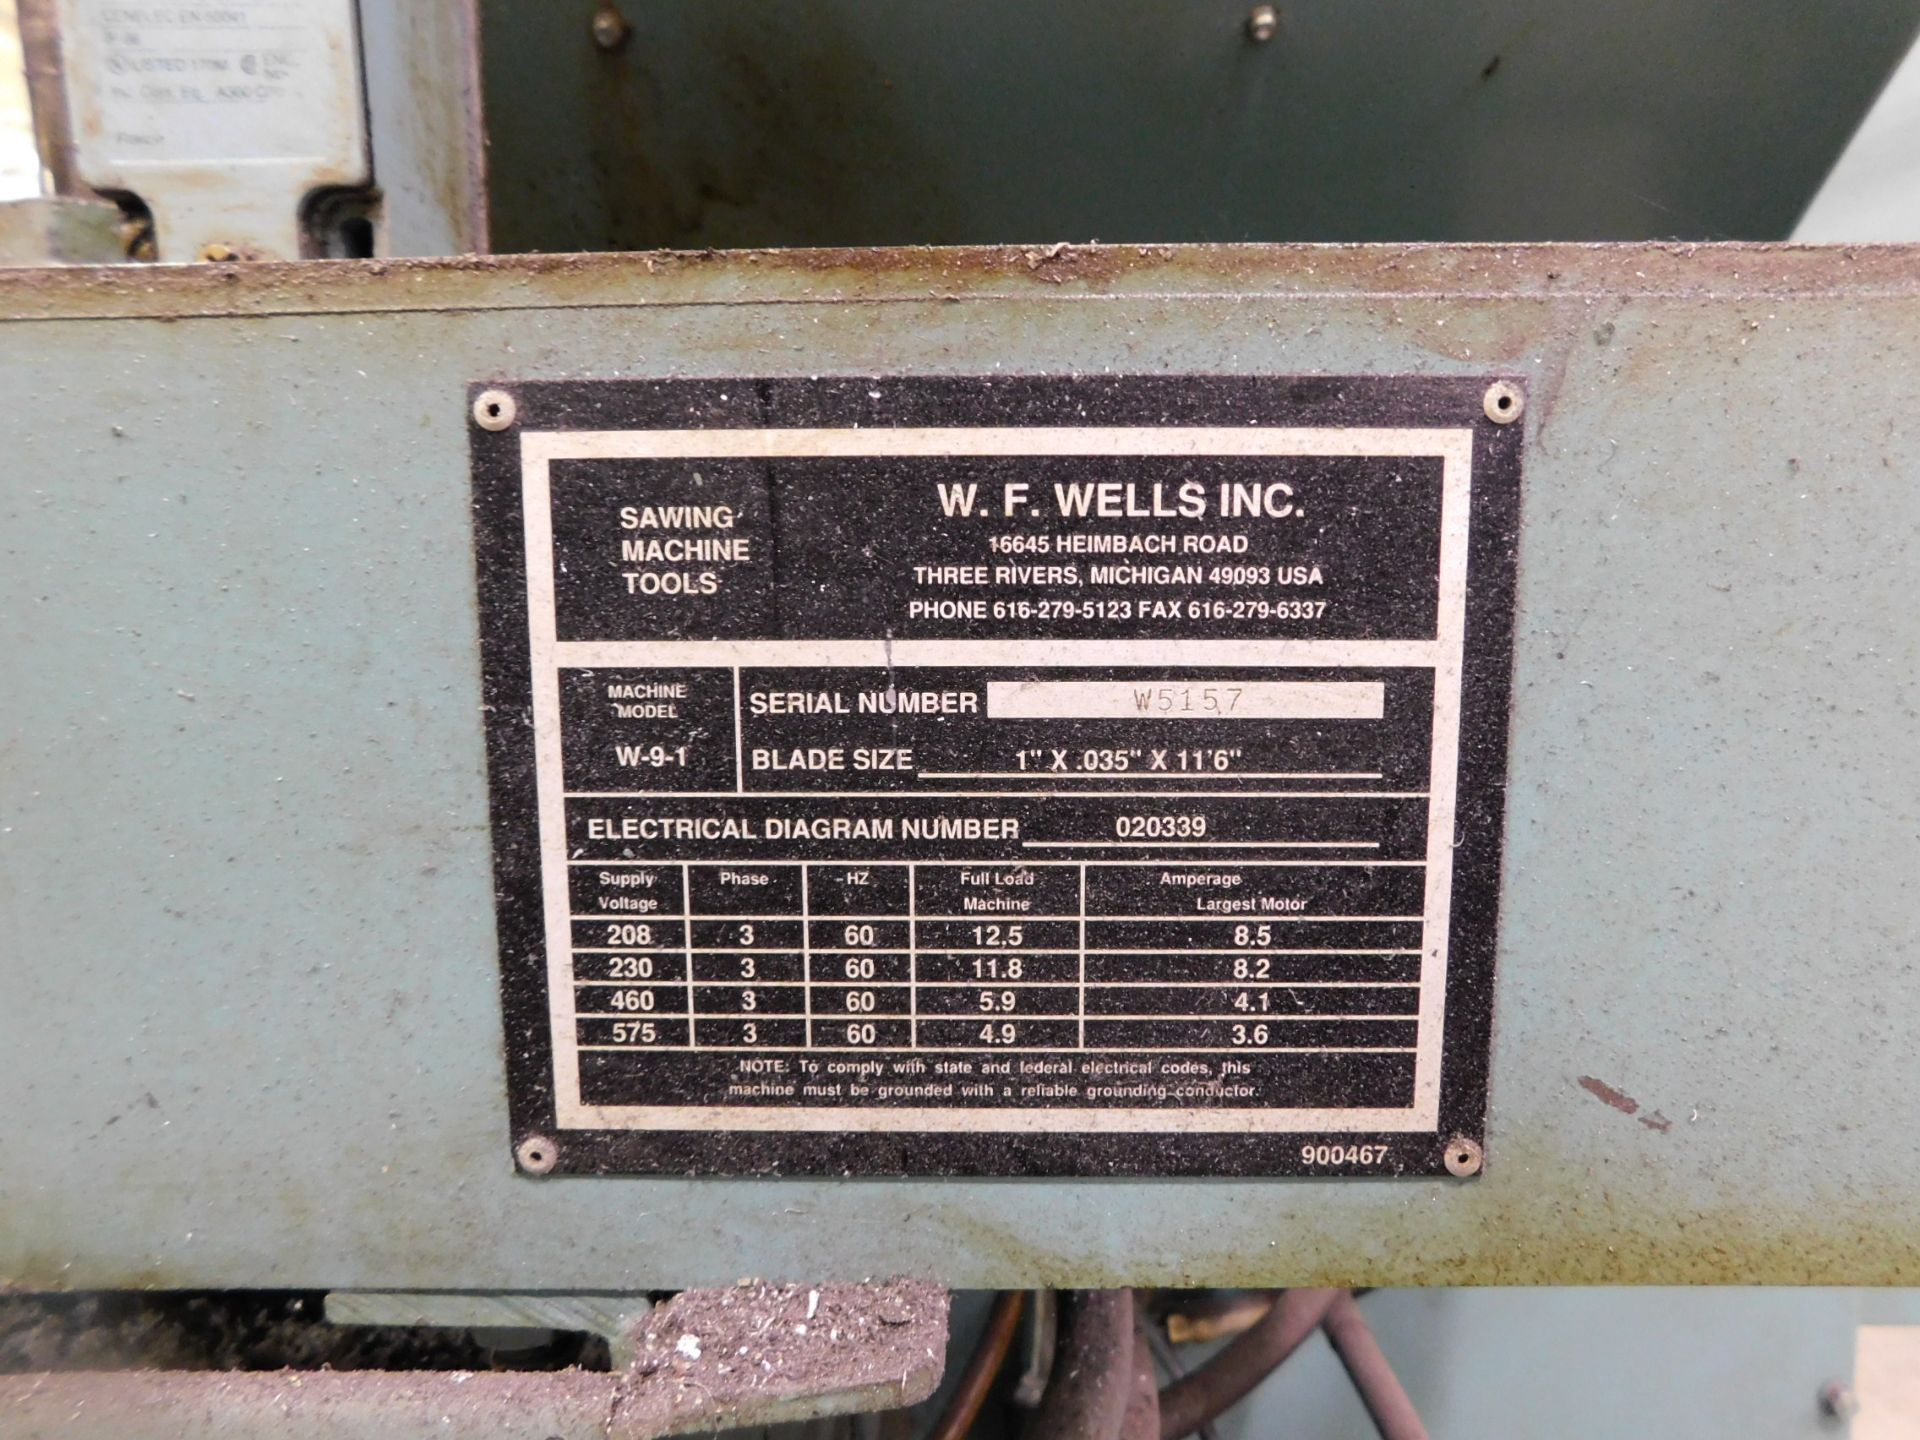 W.F. Wells Model W-9-1 Horizontal Bandsaw sn W5157, 9"X18" Capacity, 1" Blade, Coolant 3Phase - Image 7 of 8